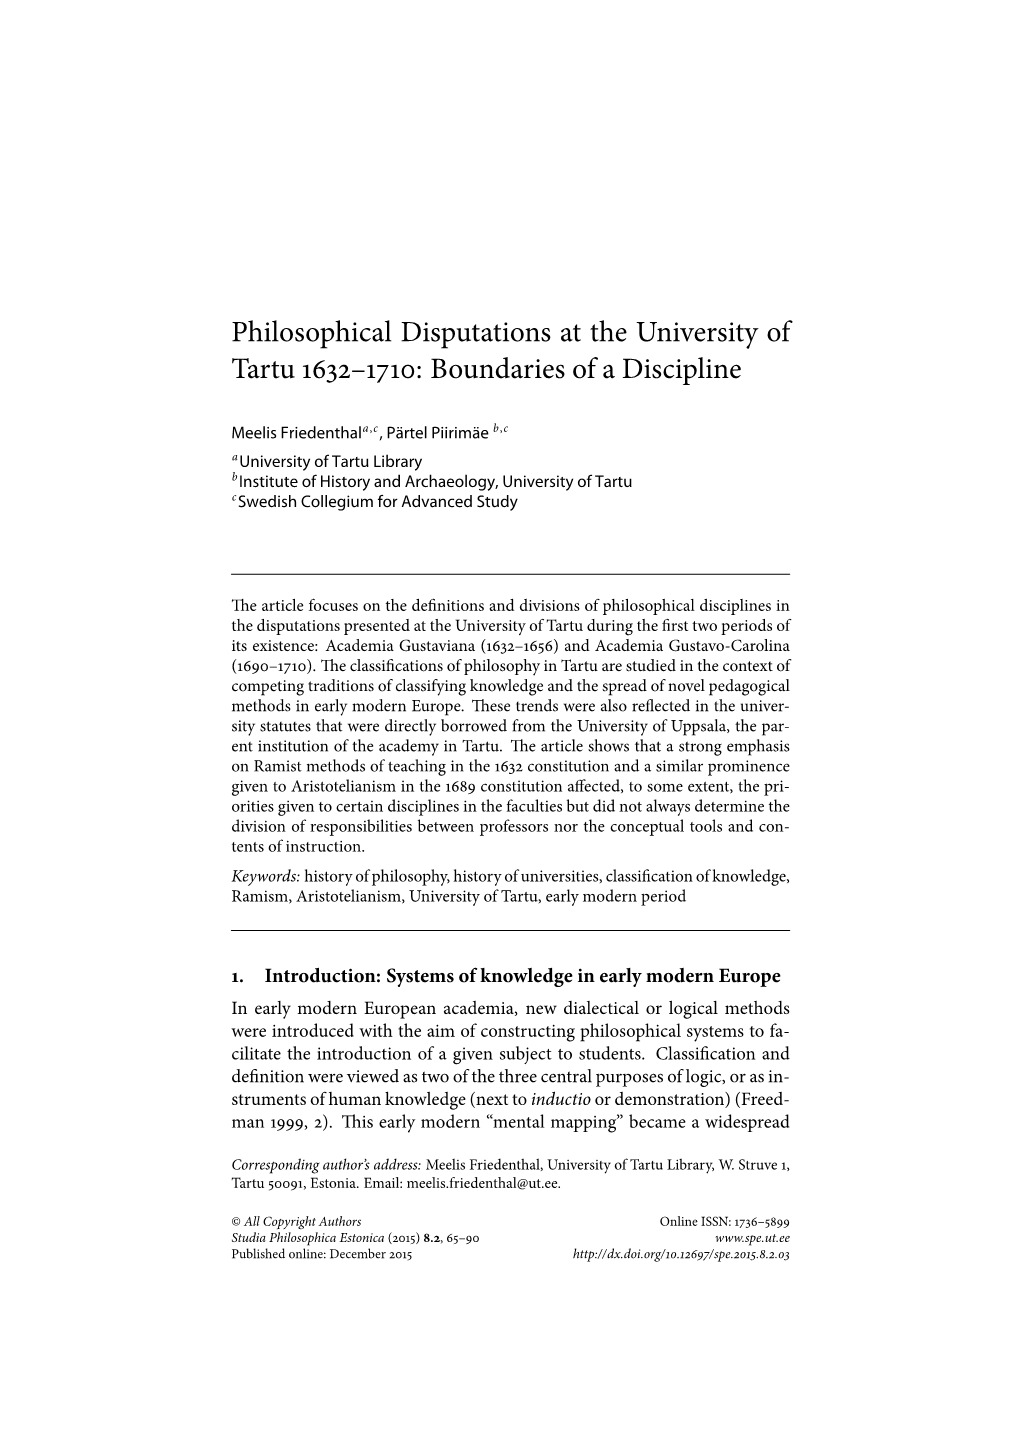 Philosophical Disputations at the University of Tartu – : Boundaries Of